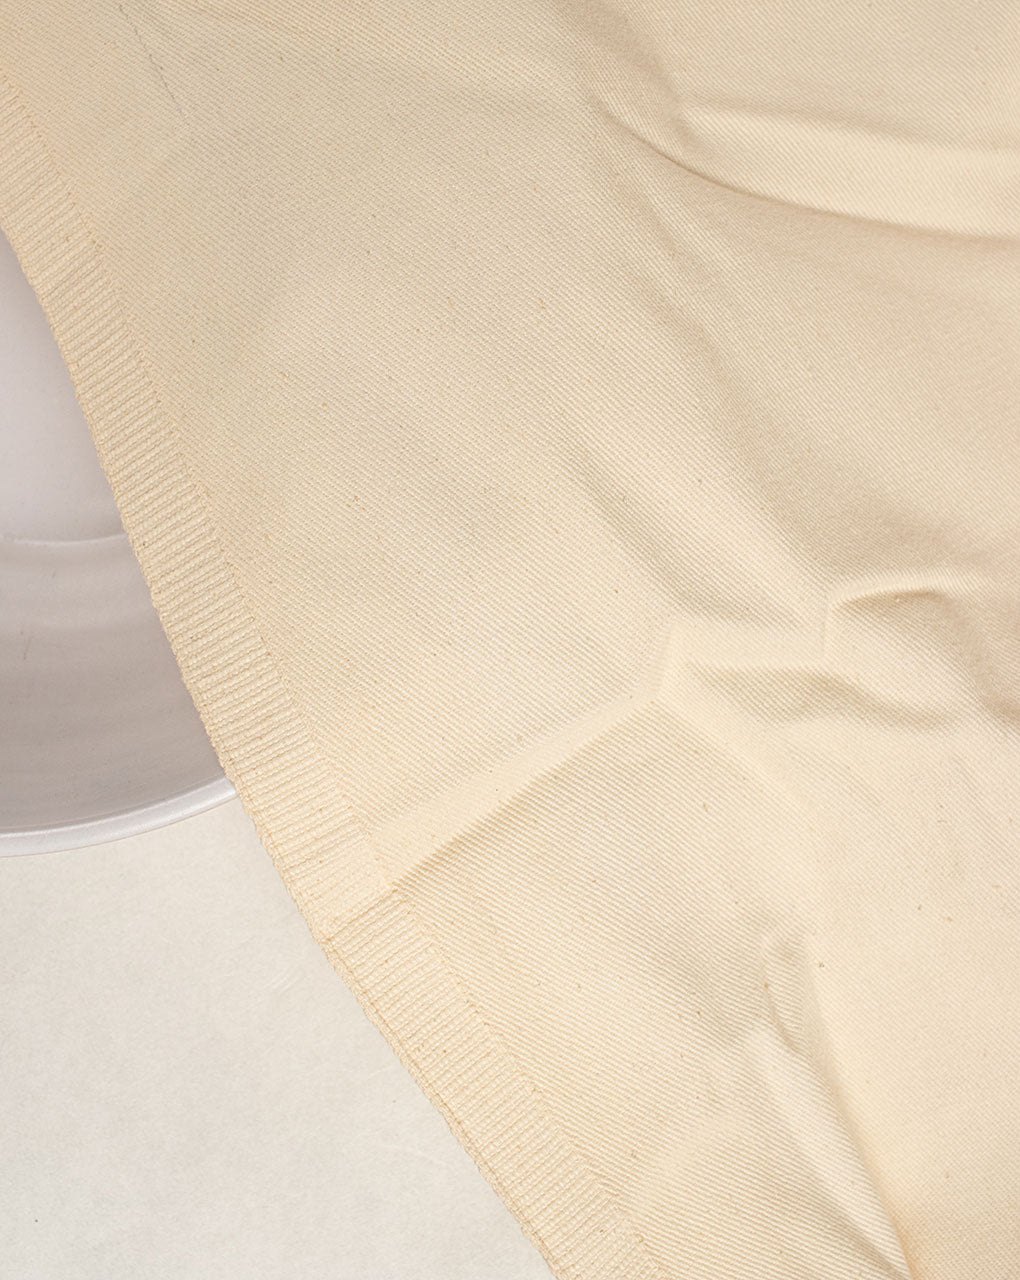 Off-White Plain Twill Cotton Fabric